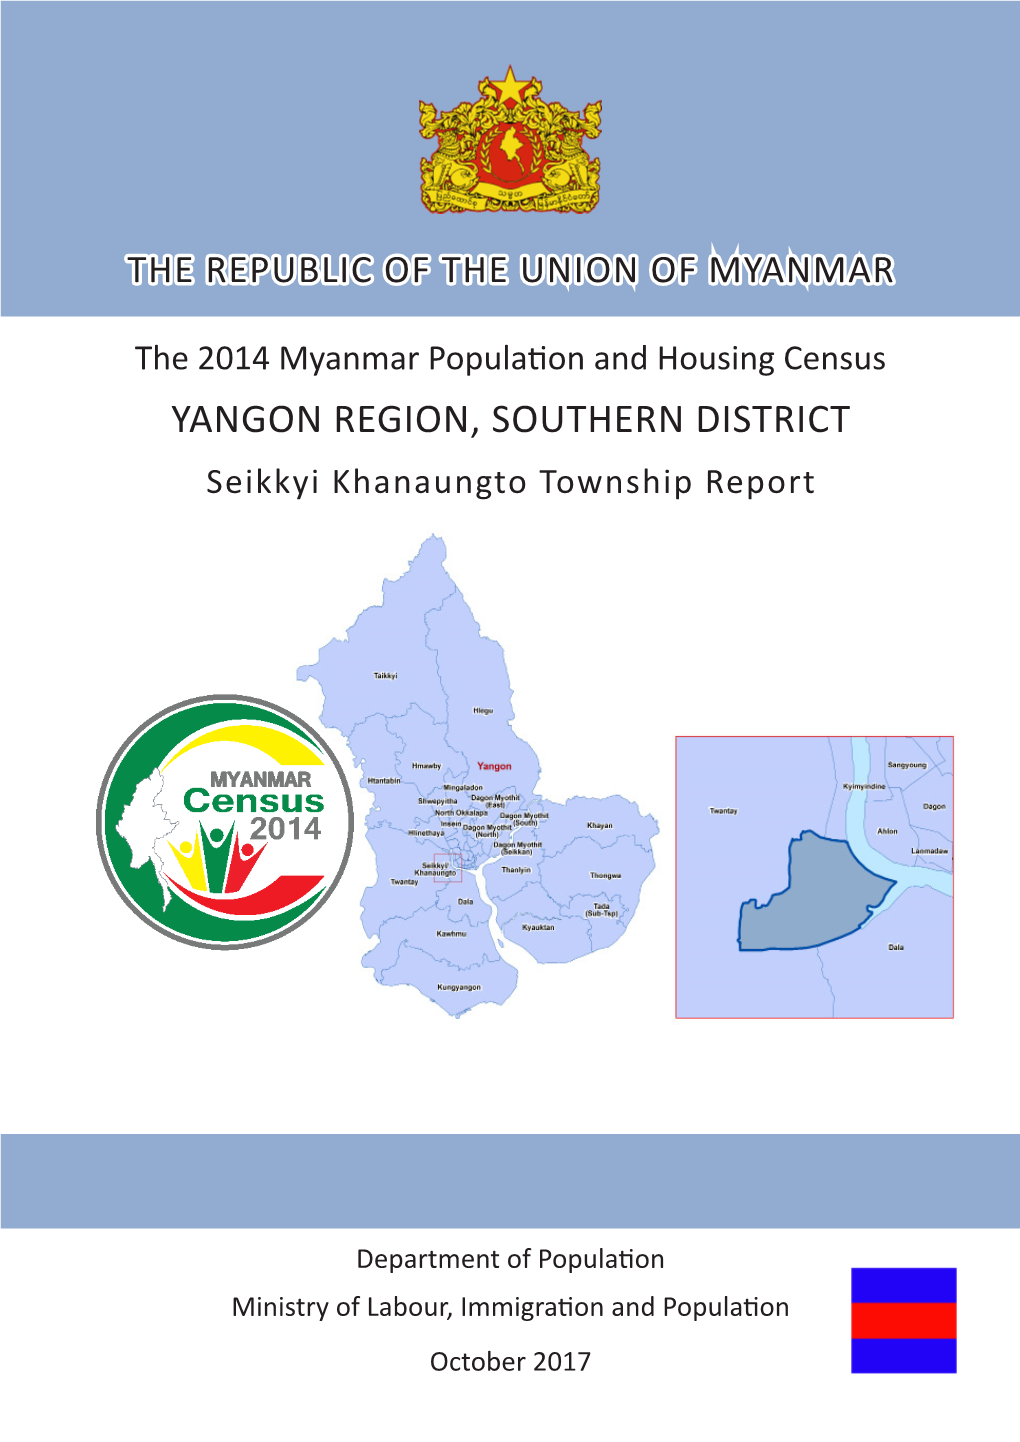 YANGON REGION, SOUTHERN DISTRICT Seikkyi Khanaungto Township Report